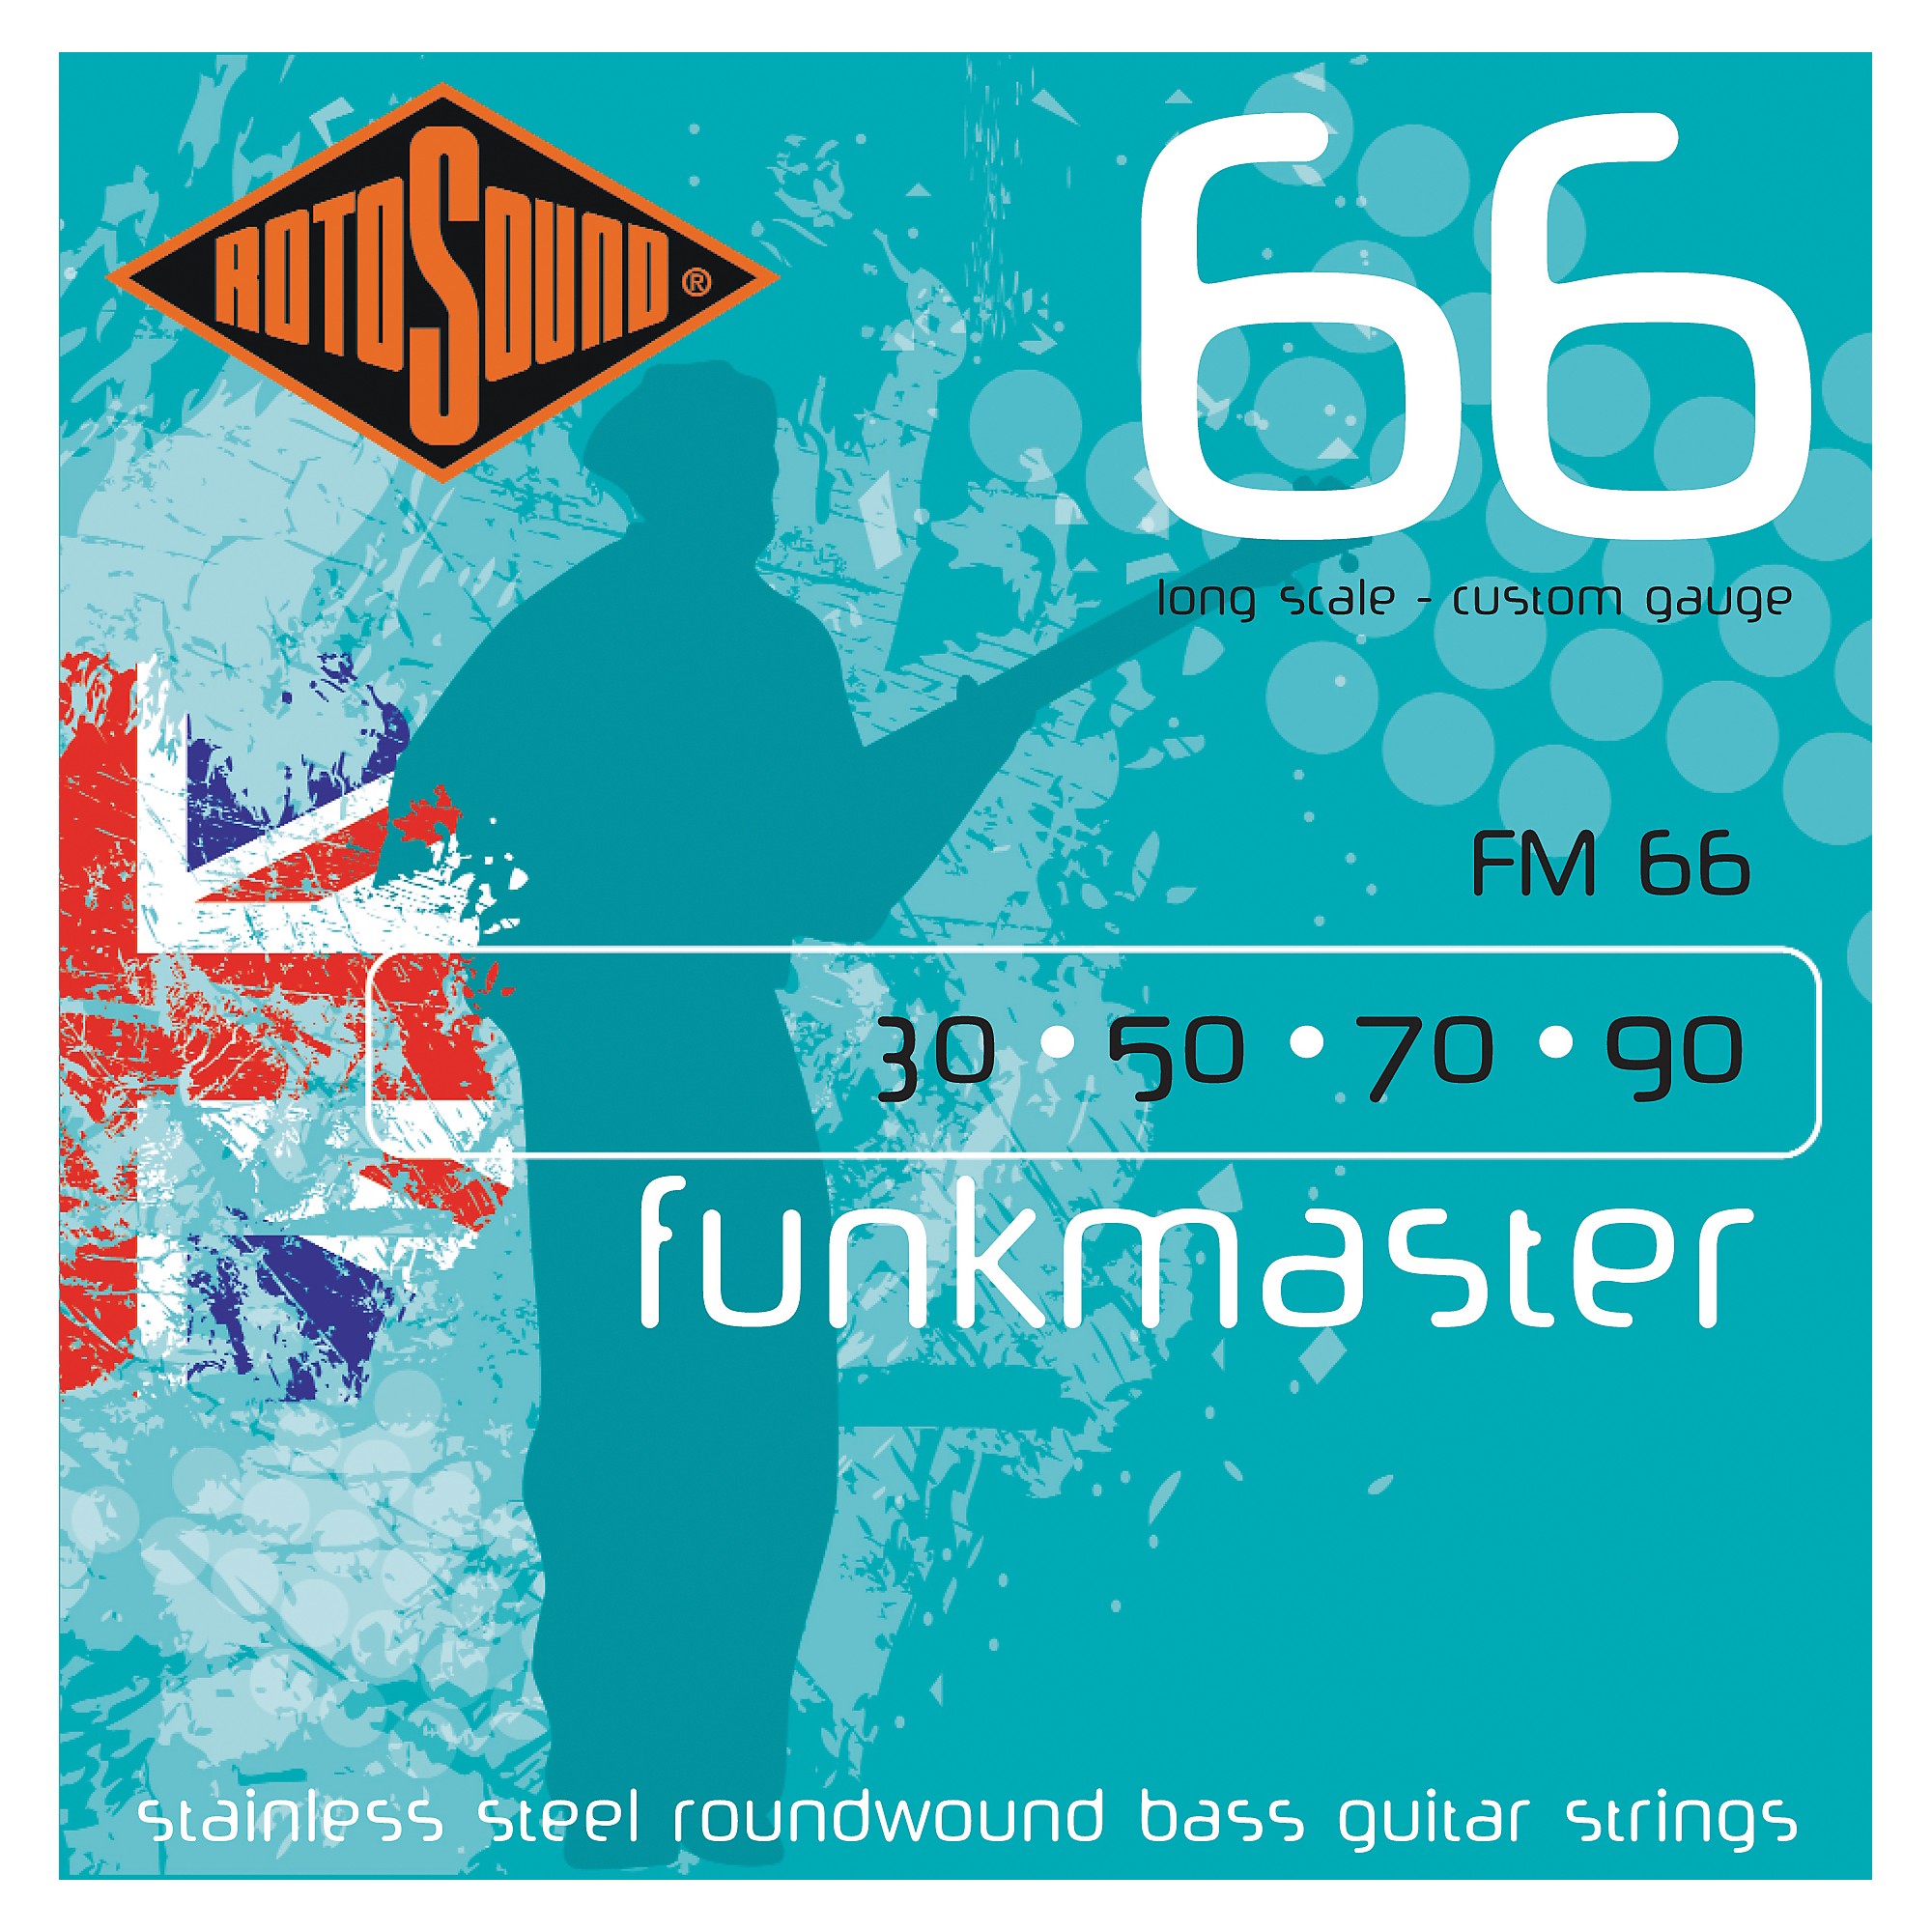 Rotosound FM66 Funk Master Bass Strings | Guitar Center